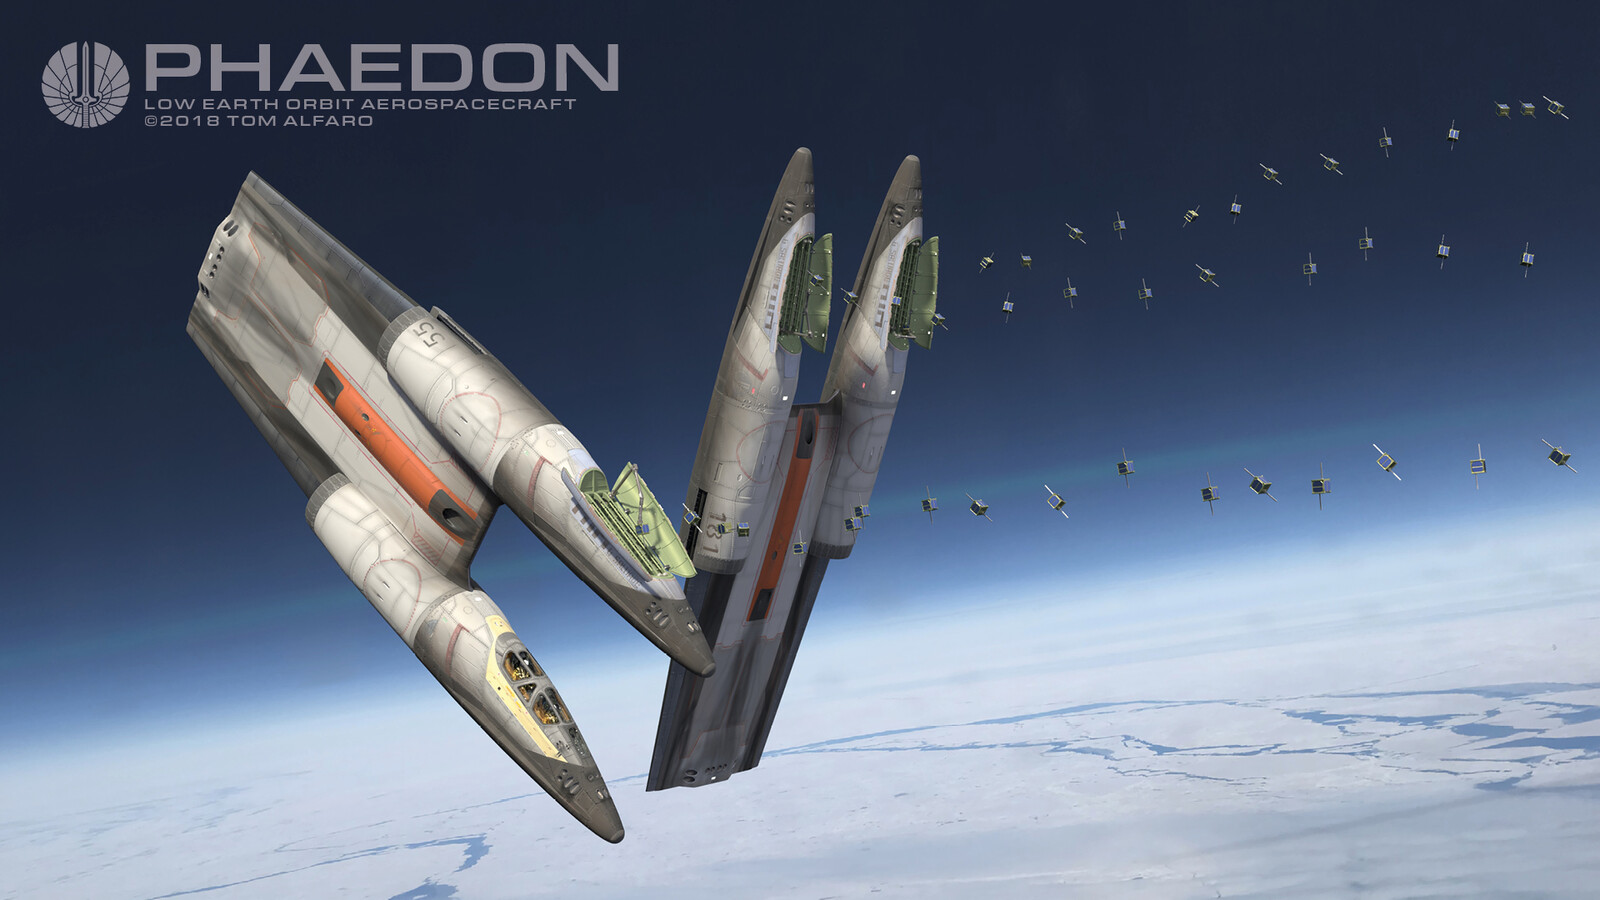 Phaedon multi-ship, dual configuration missions